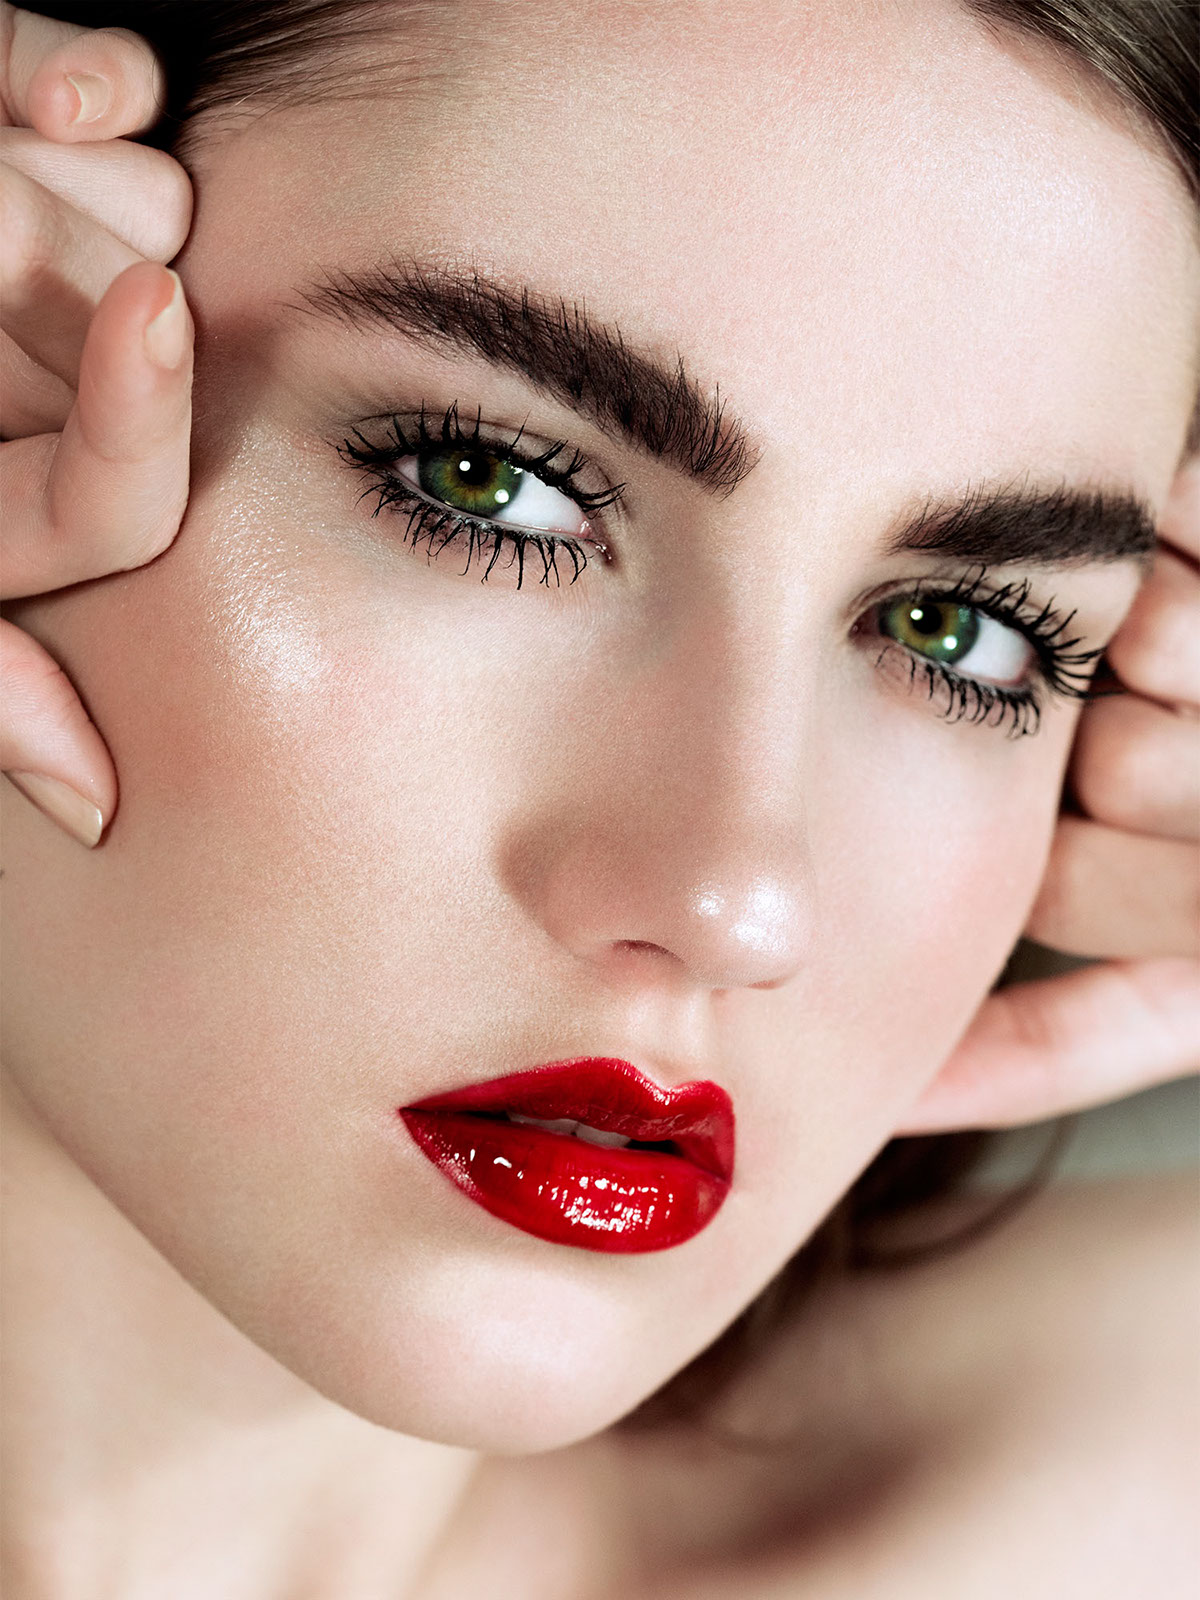 beauty retoucher Mdf retouching Elle Magazine editorial Marina Dean-francis makeup stunning